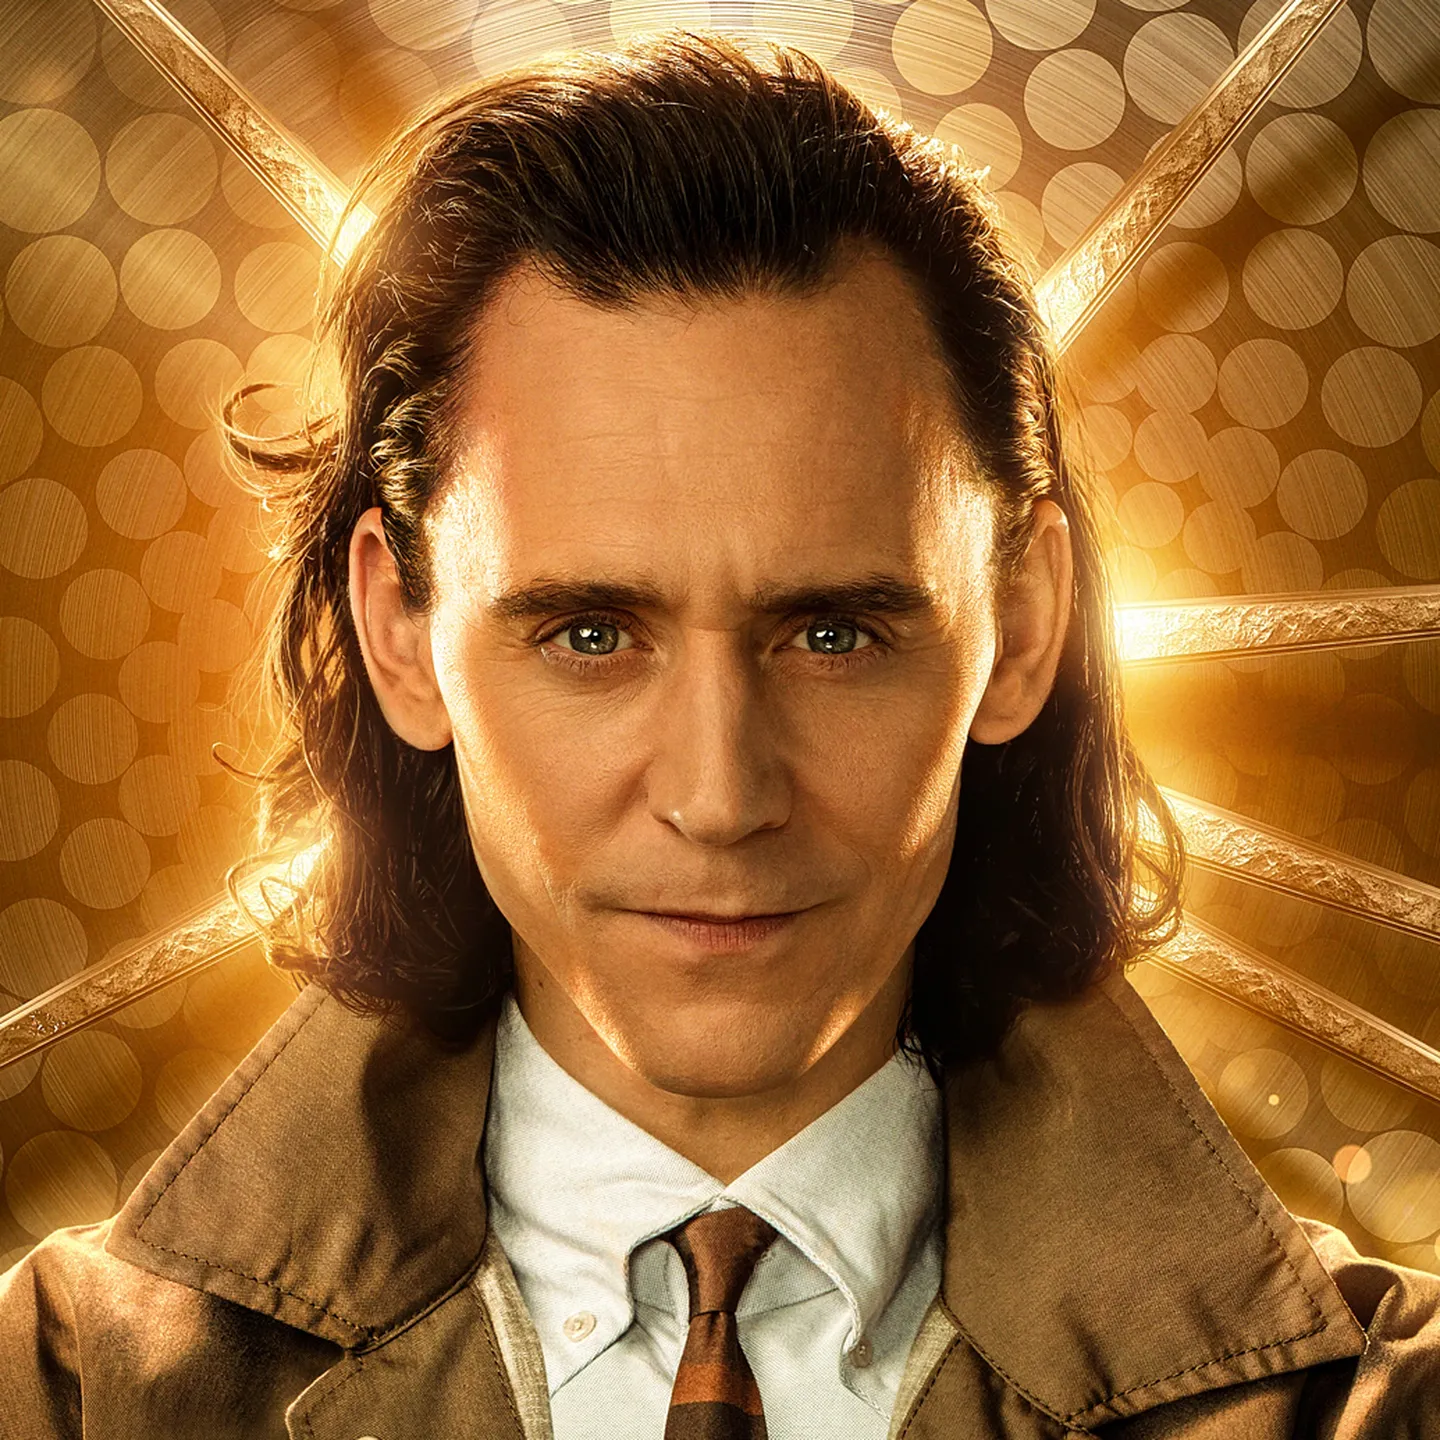 Marvel’s ‘Loki’ Season 2 Returns with Fresh Twists in Multiverse Unleashed